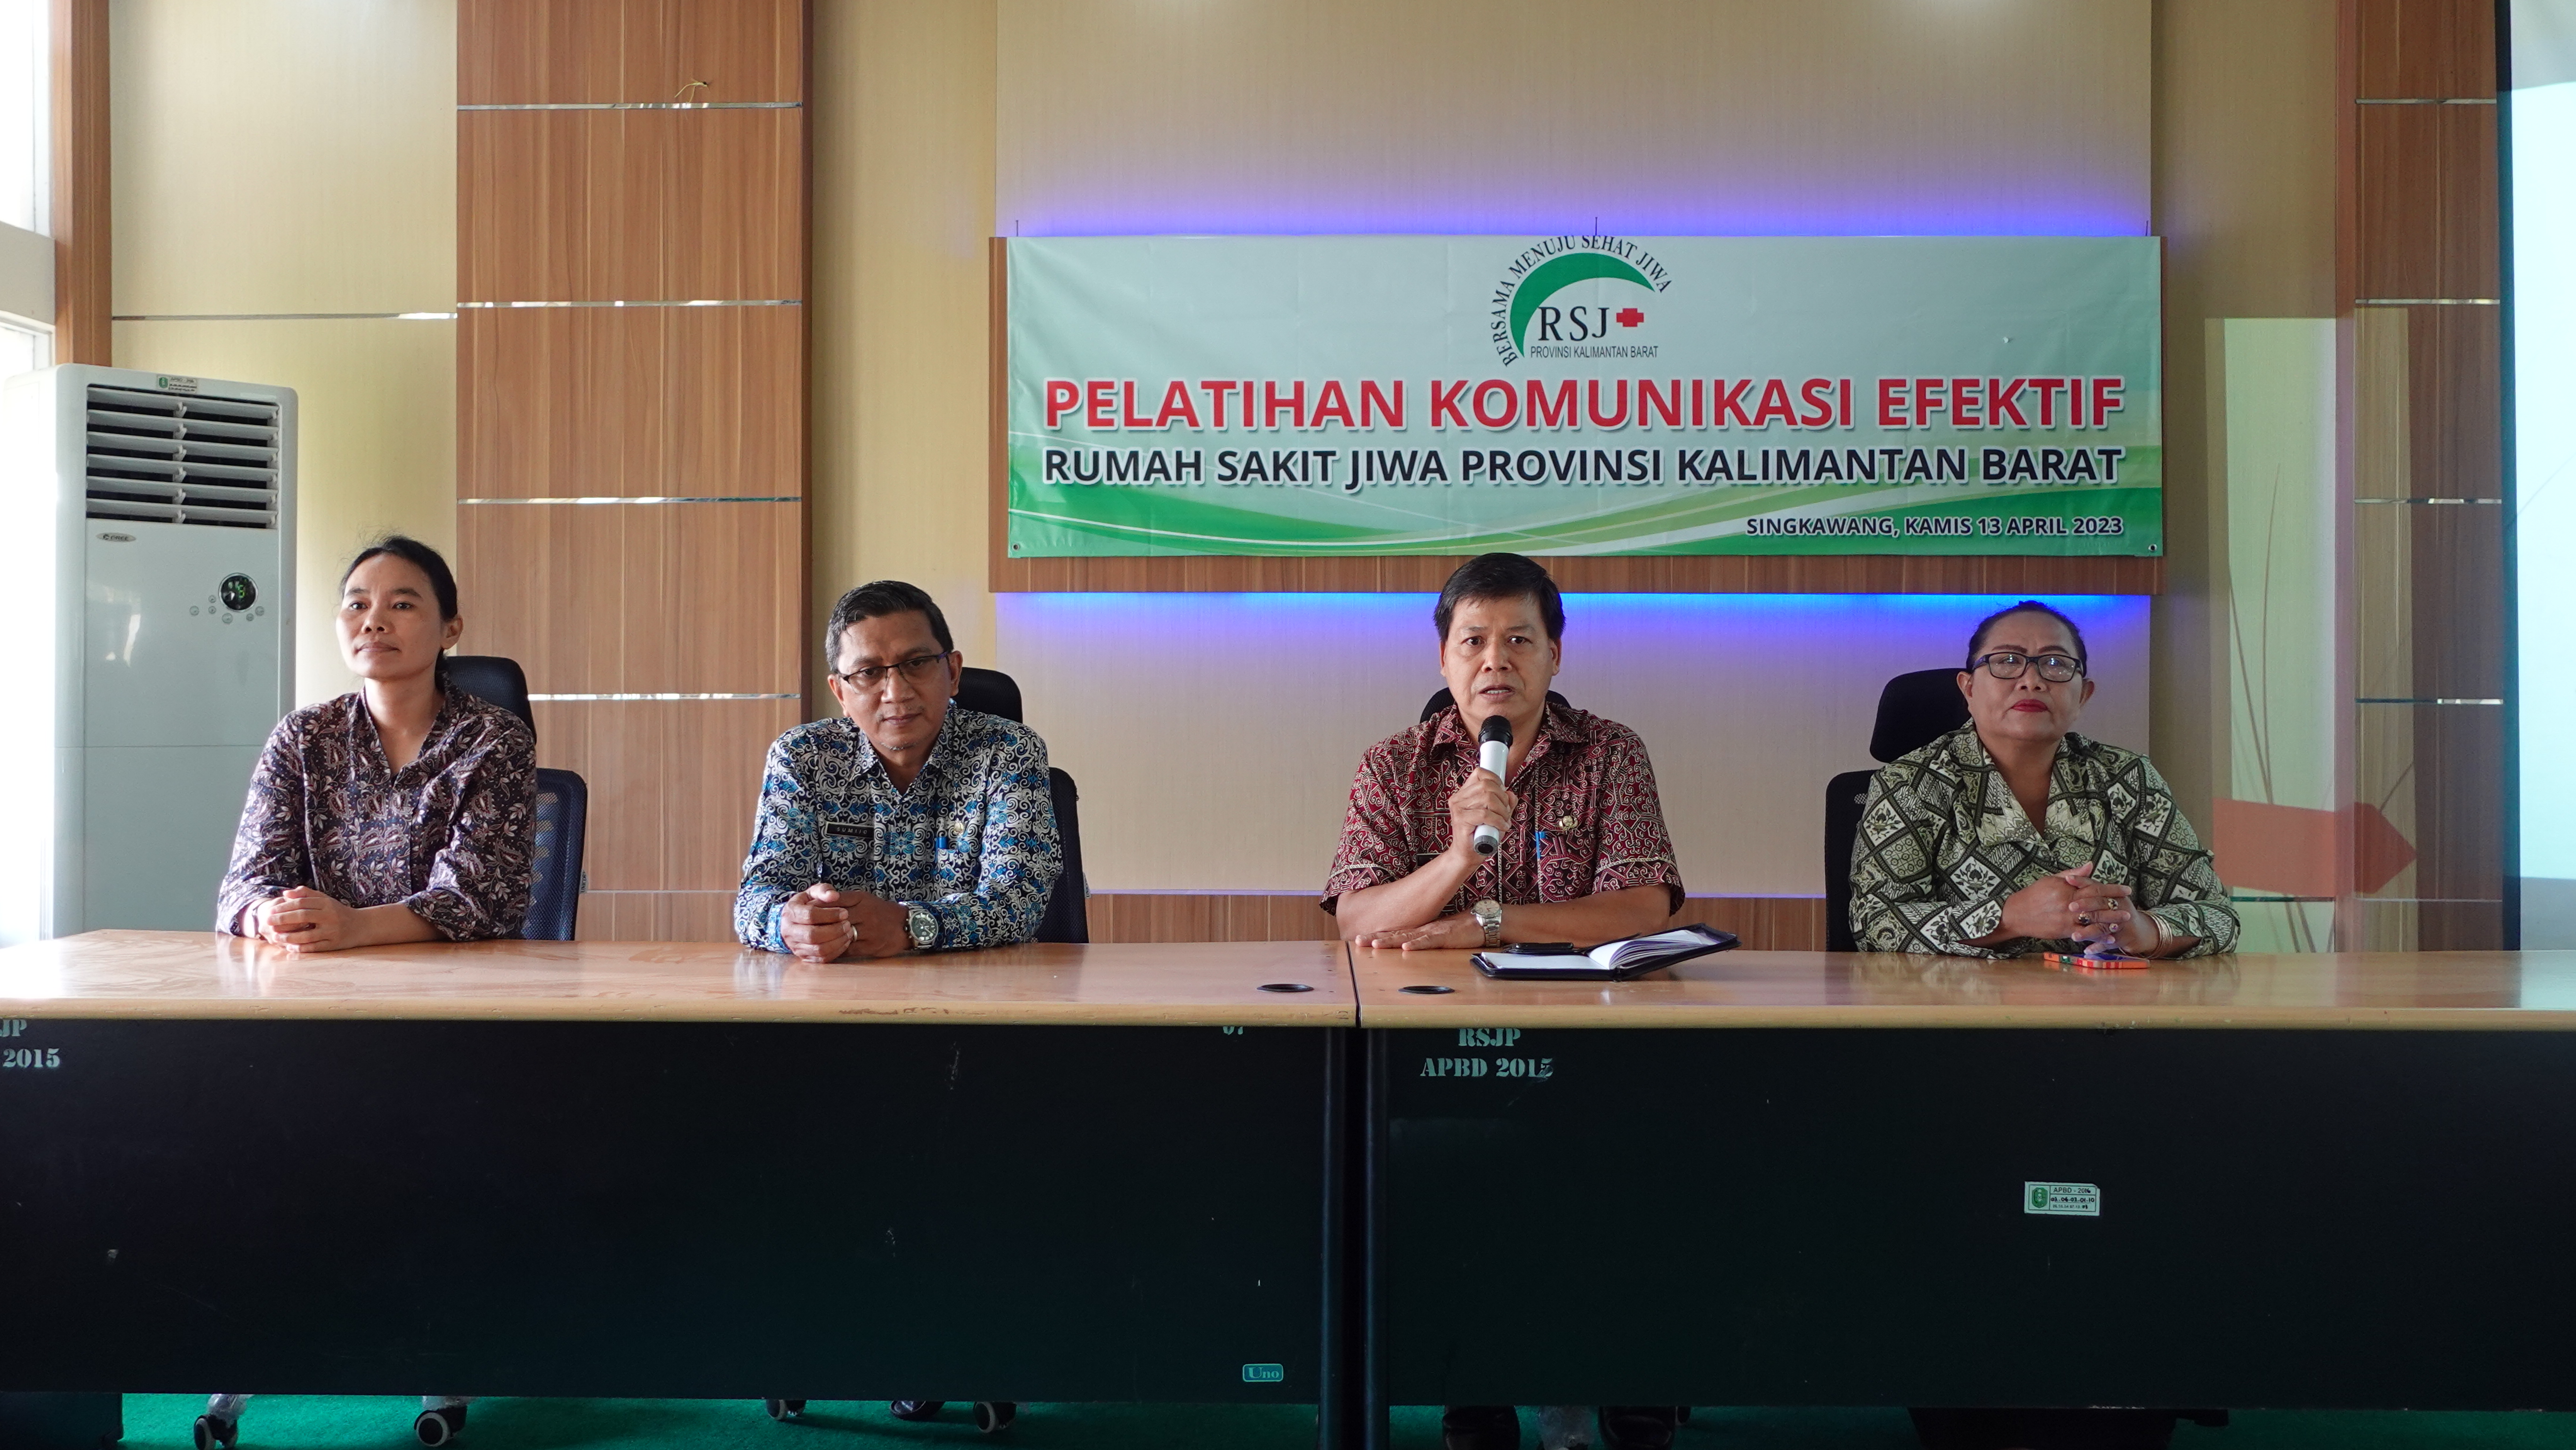 Pelatihan Komunikasi Efektif Di Rumah Sakit Jiwa Provinsi Kalimantan Barat